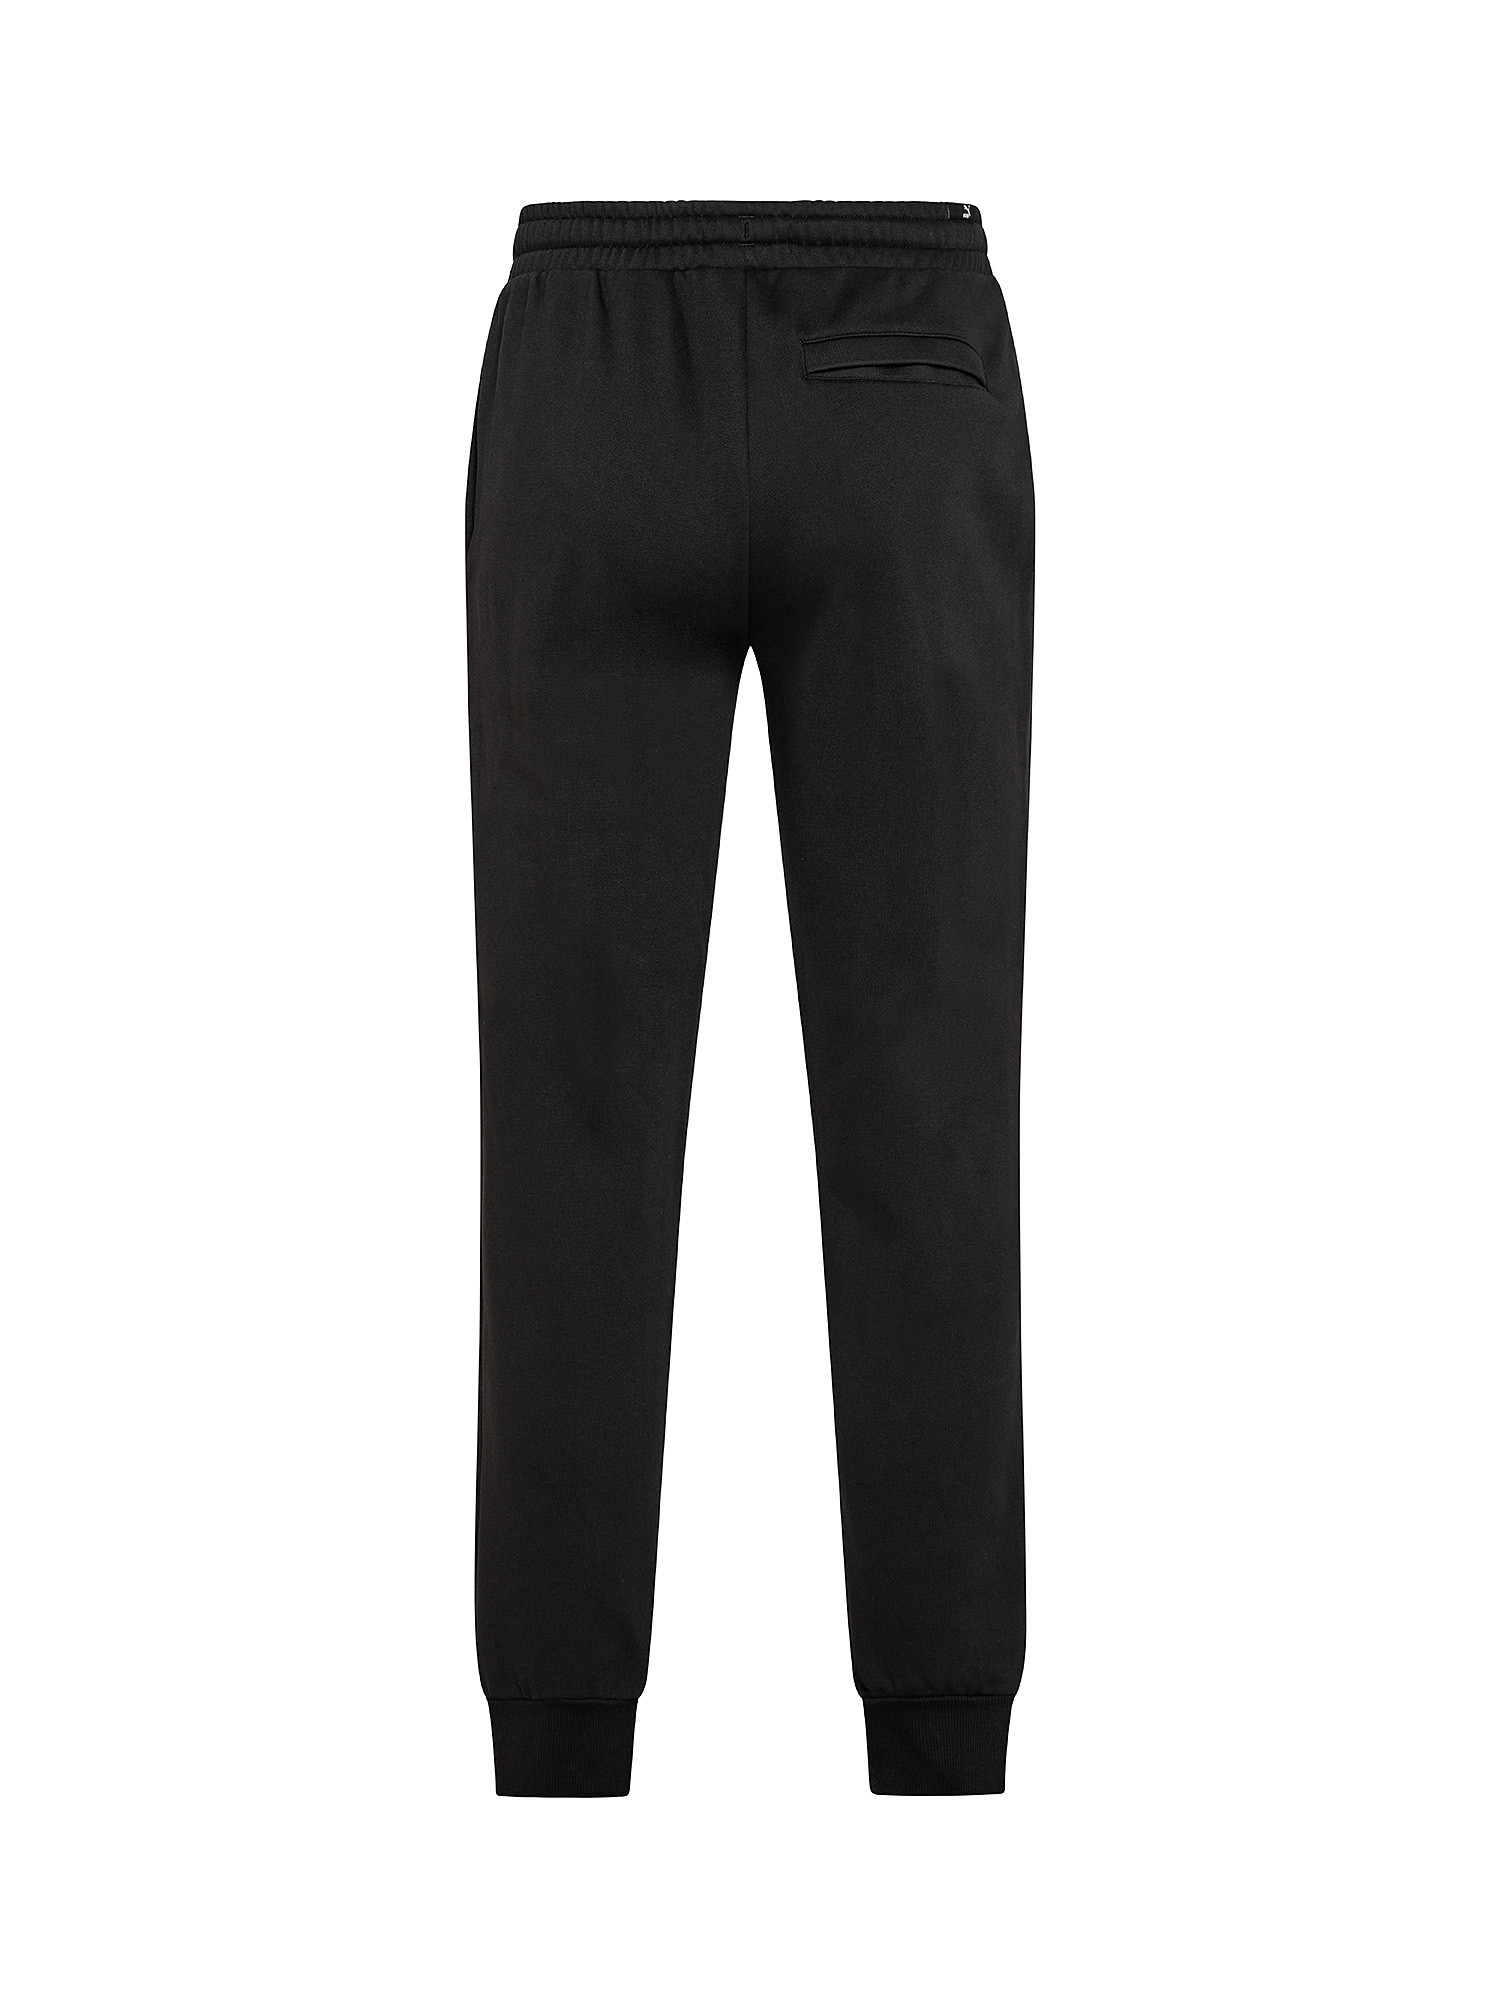 Sweatpants with logo, Black, large image number 1